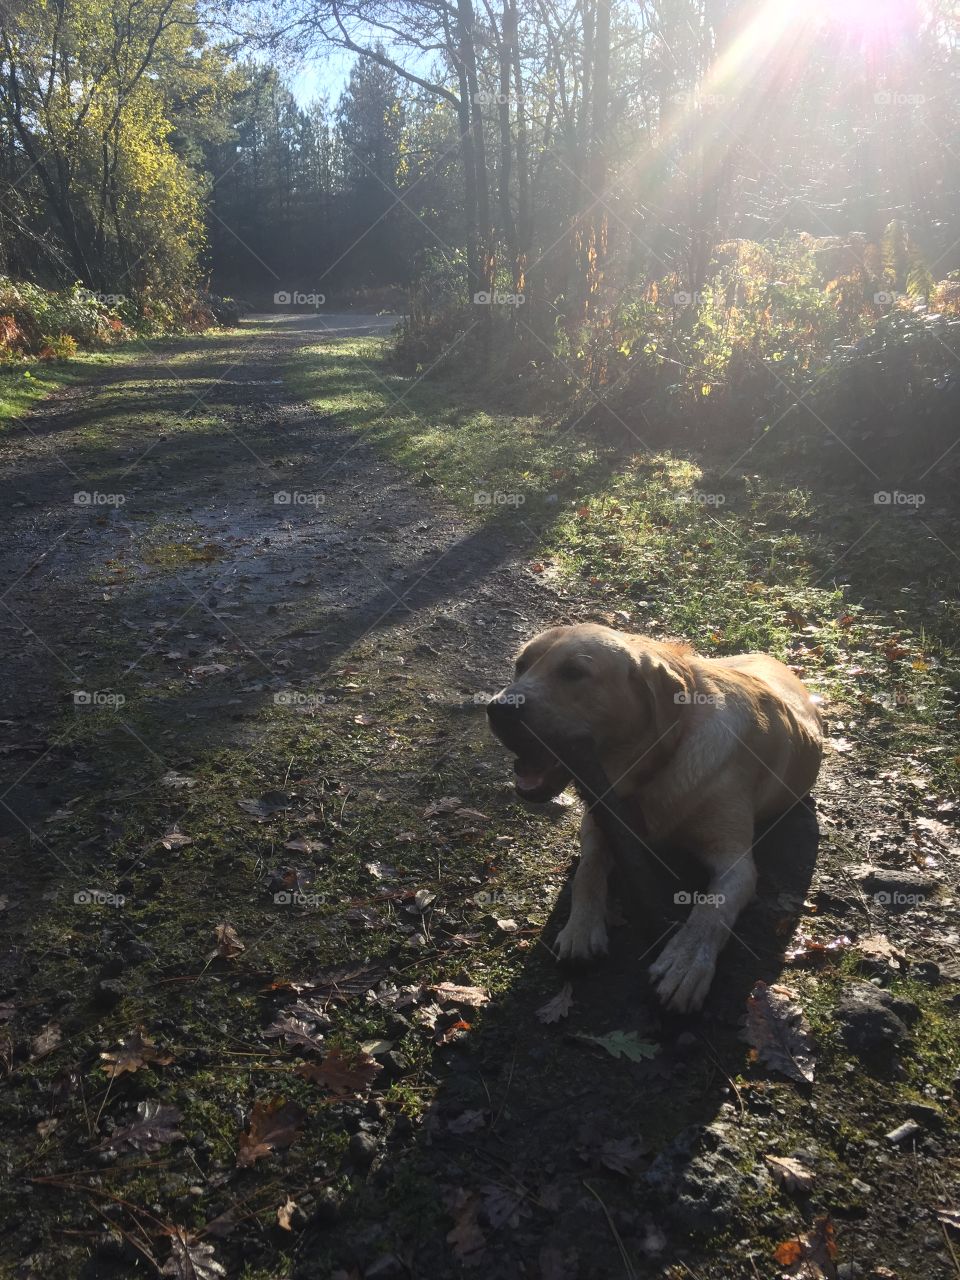 Dog makes a pit stop to enjoy a stick